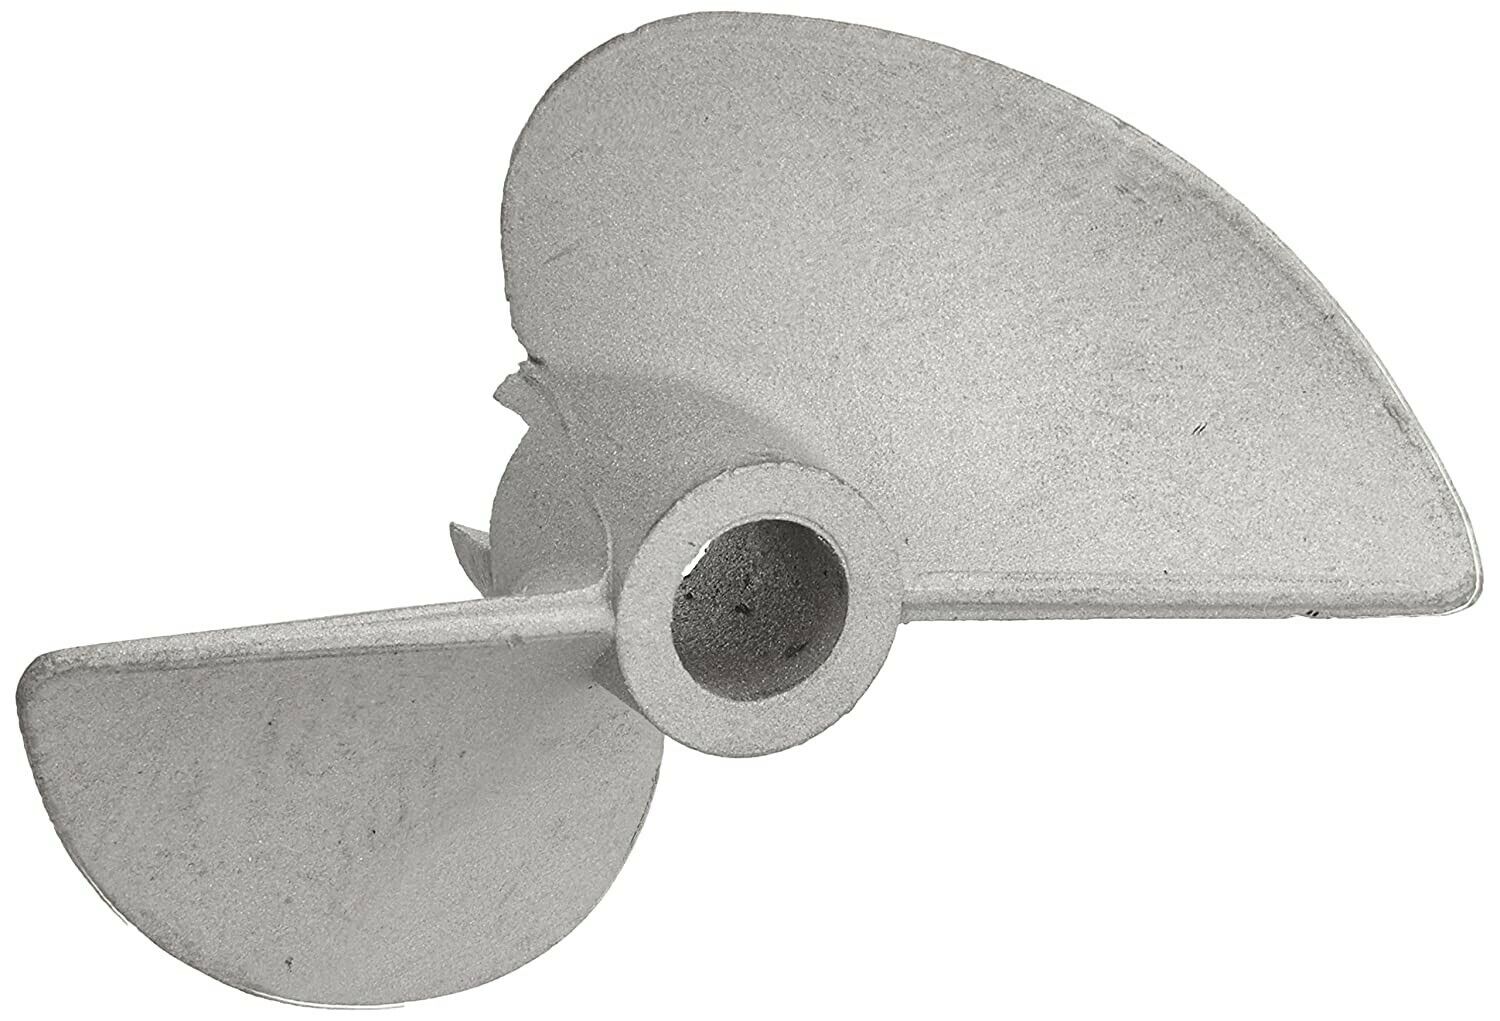 Pro Boat Propeller: Voracity 36-inch BL 1.6x1.77 - Elica Bipala in metallo